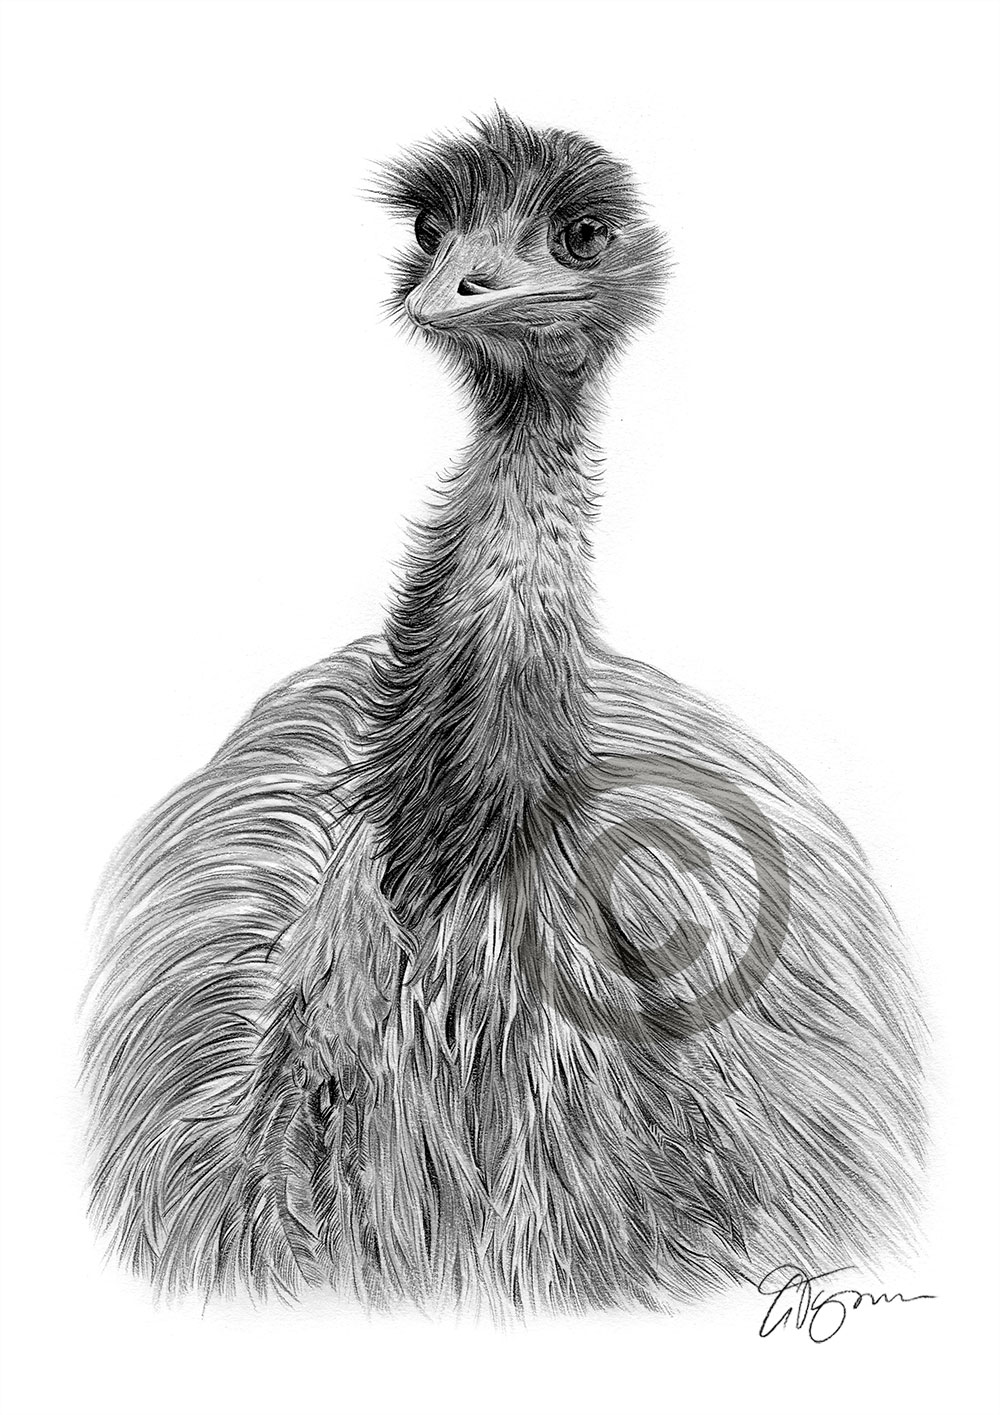 Pencil drawing of an emu by UK artist Gary Tymon